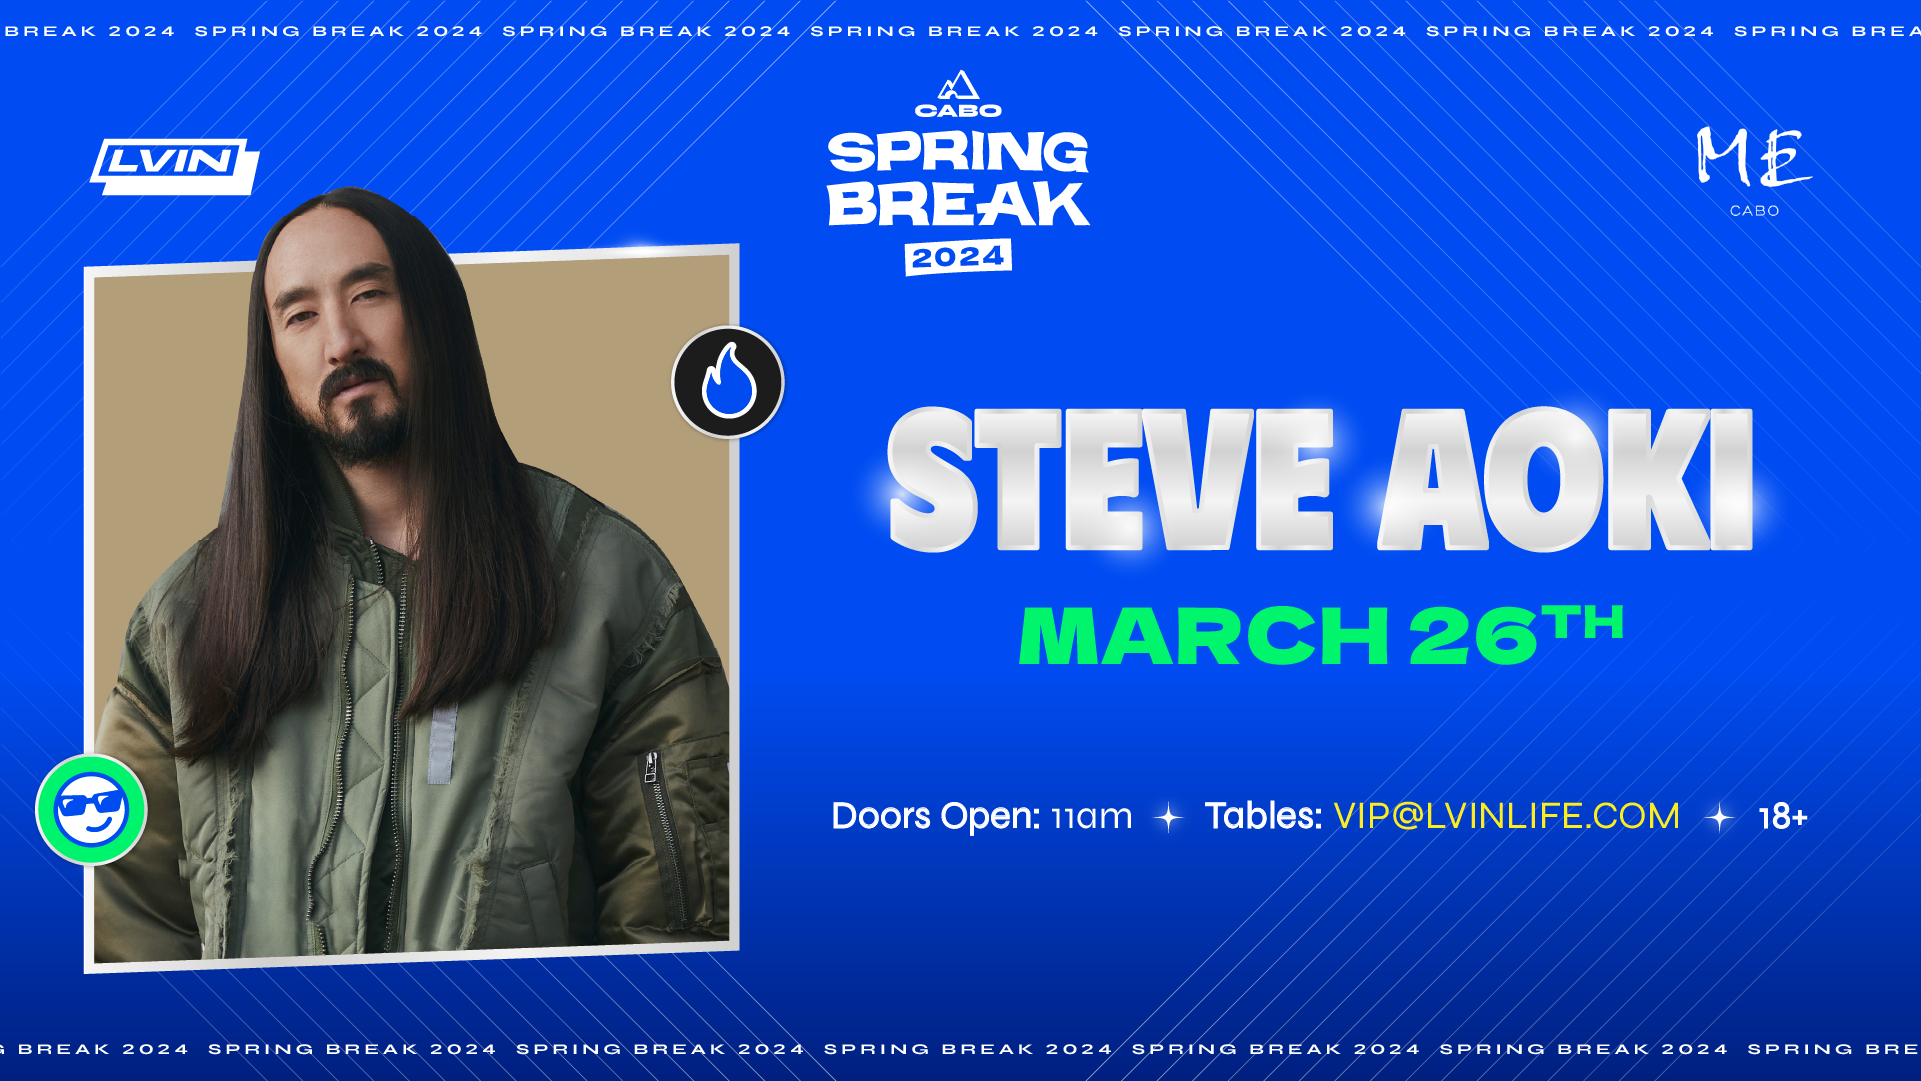 LVIN Cabo Spring Break 2024 ME Concert March 26 Steve Aoki Admat